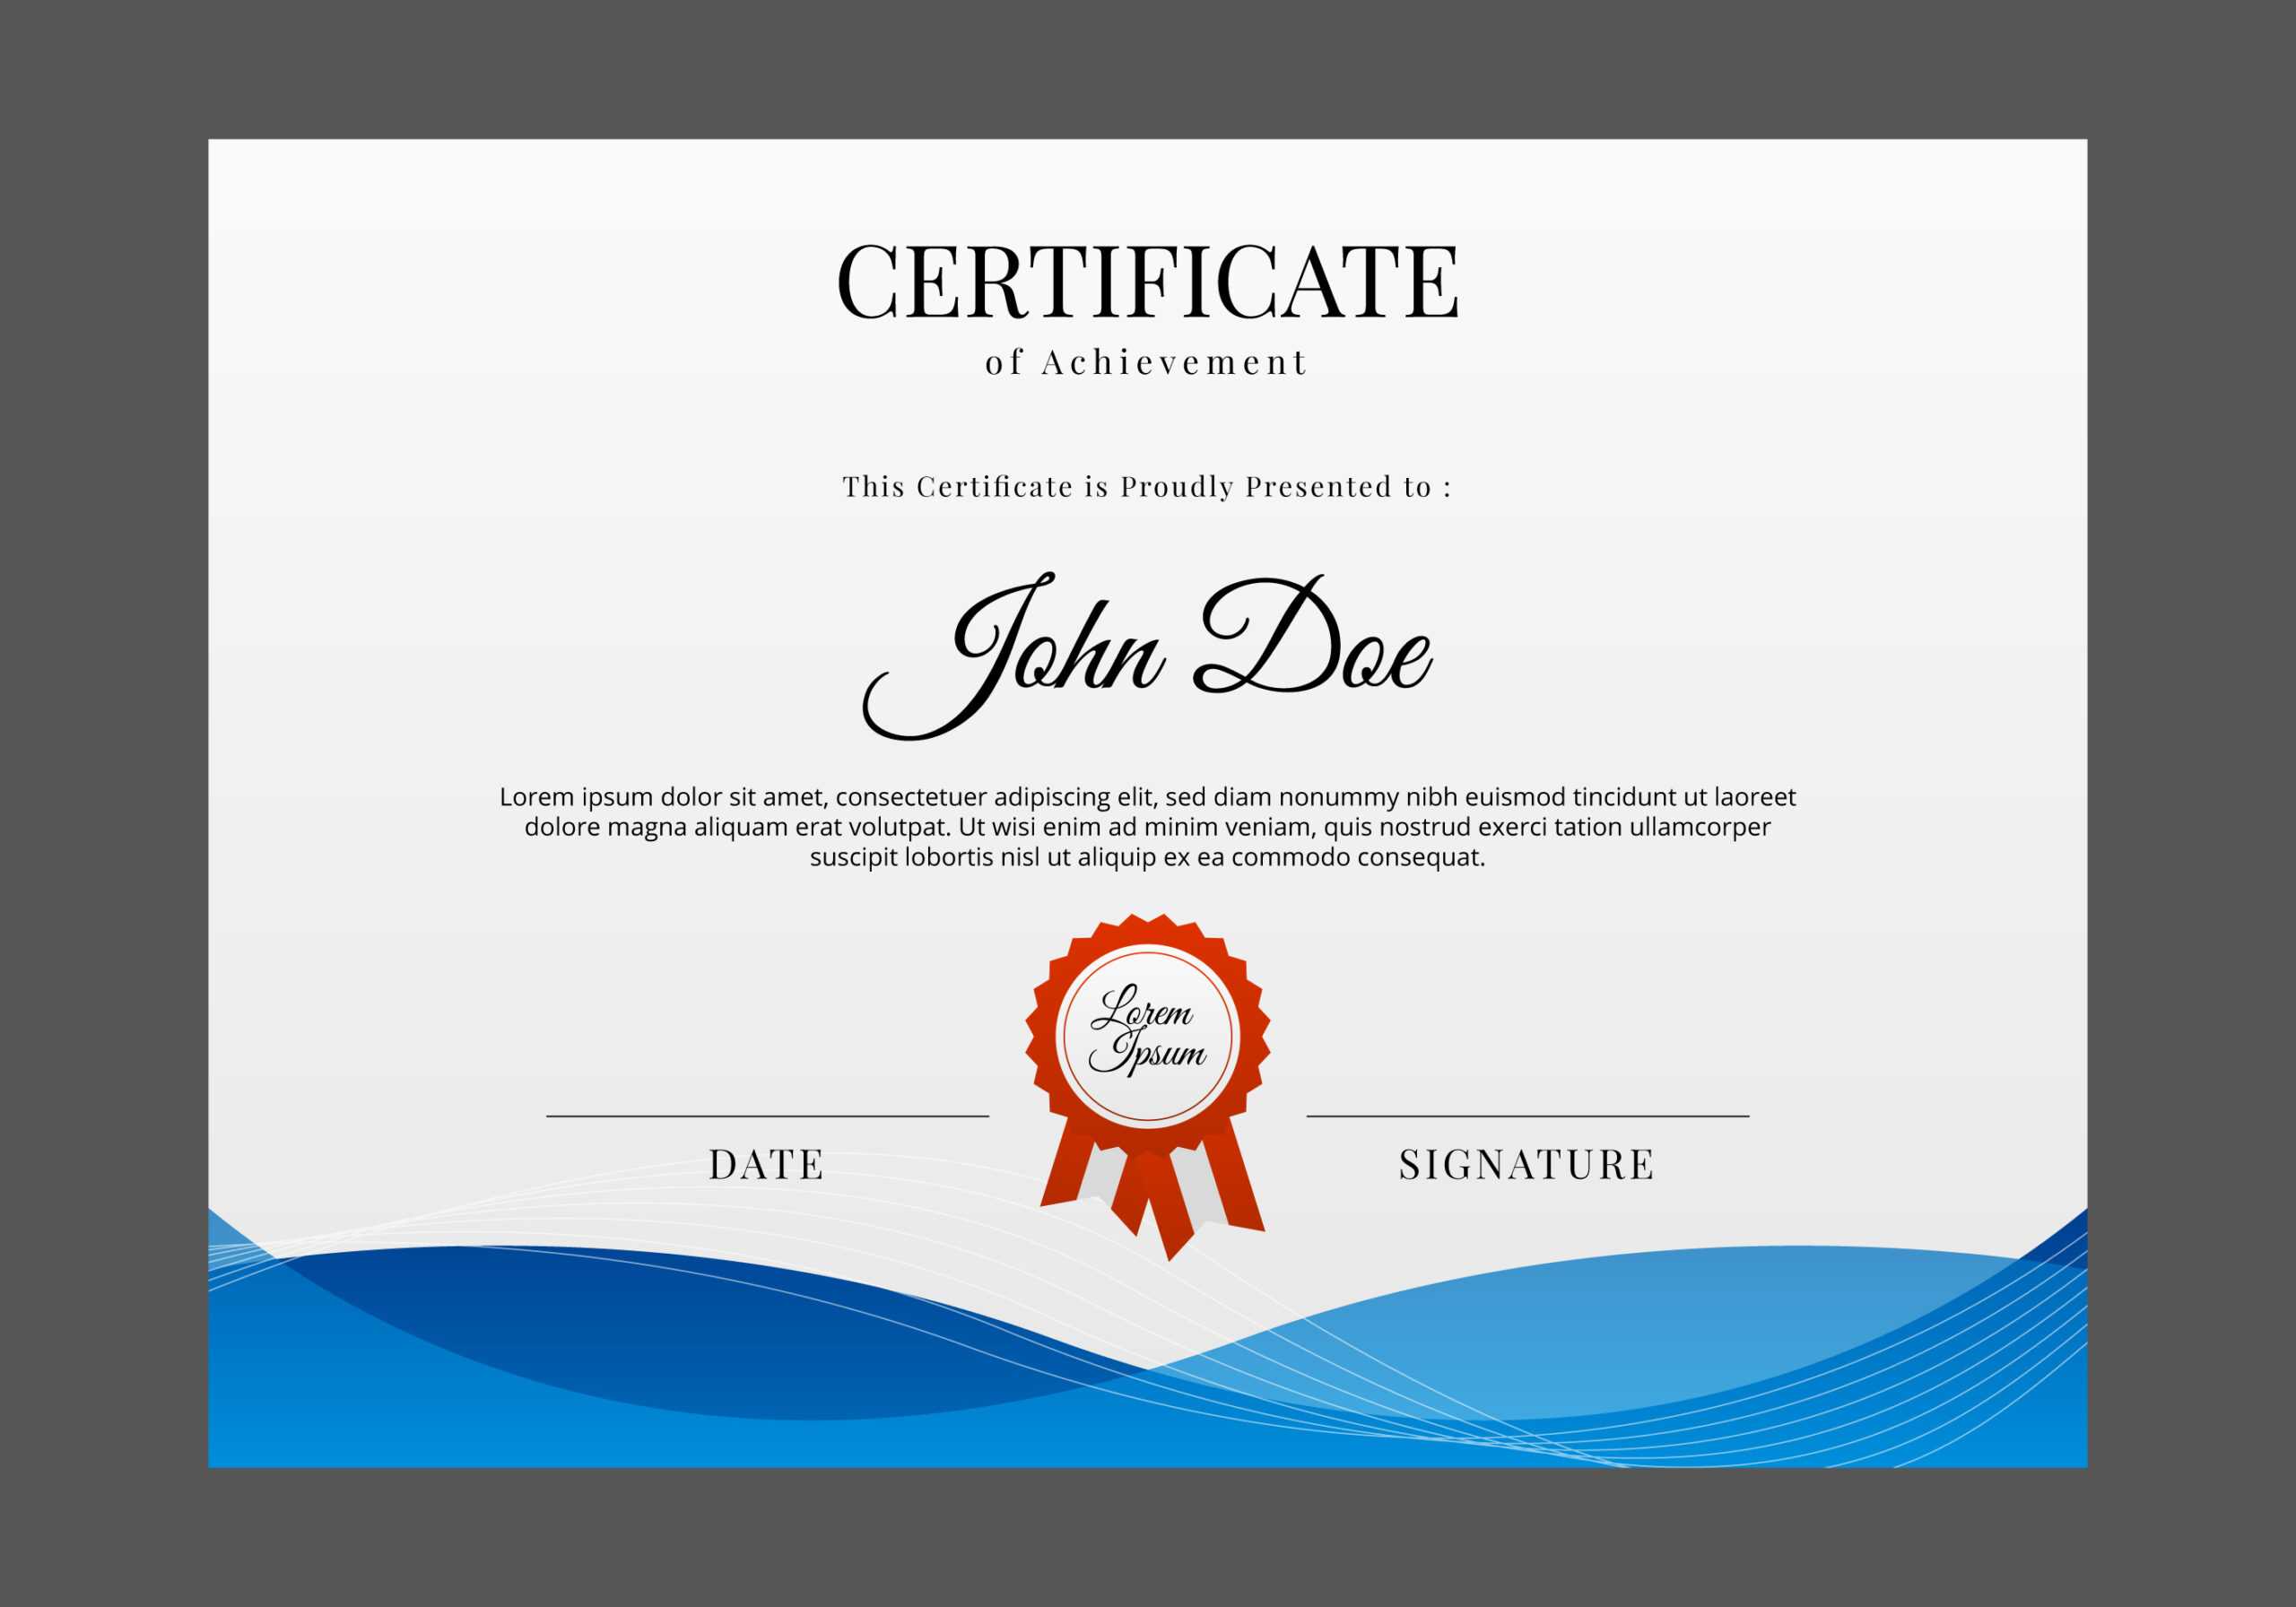 Certificate Design Free Vector Art – (10,209 Free Downloads) Throughout Design A Certificate Template